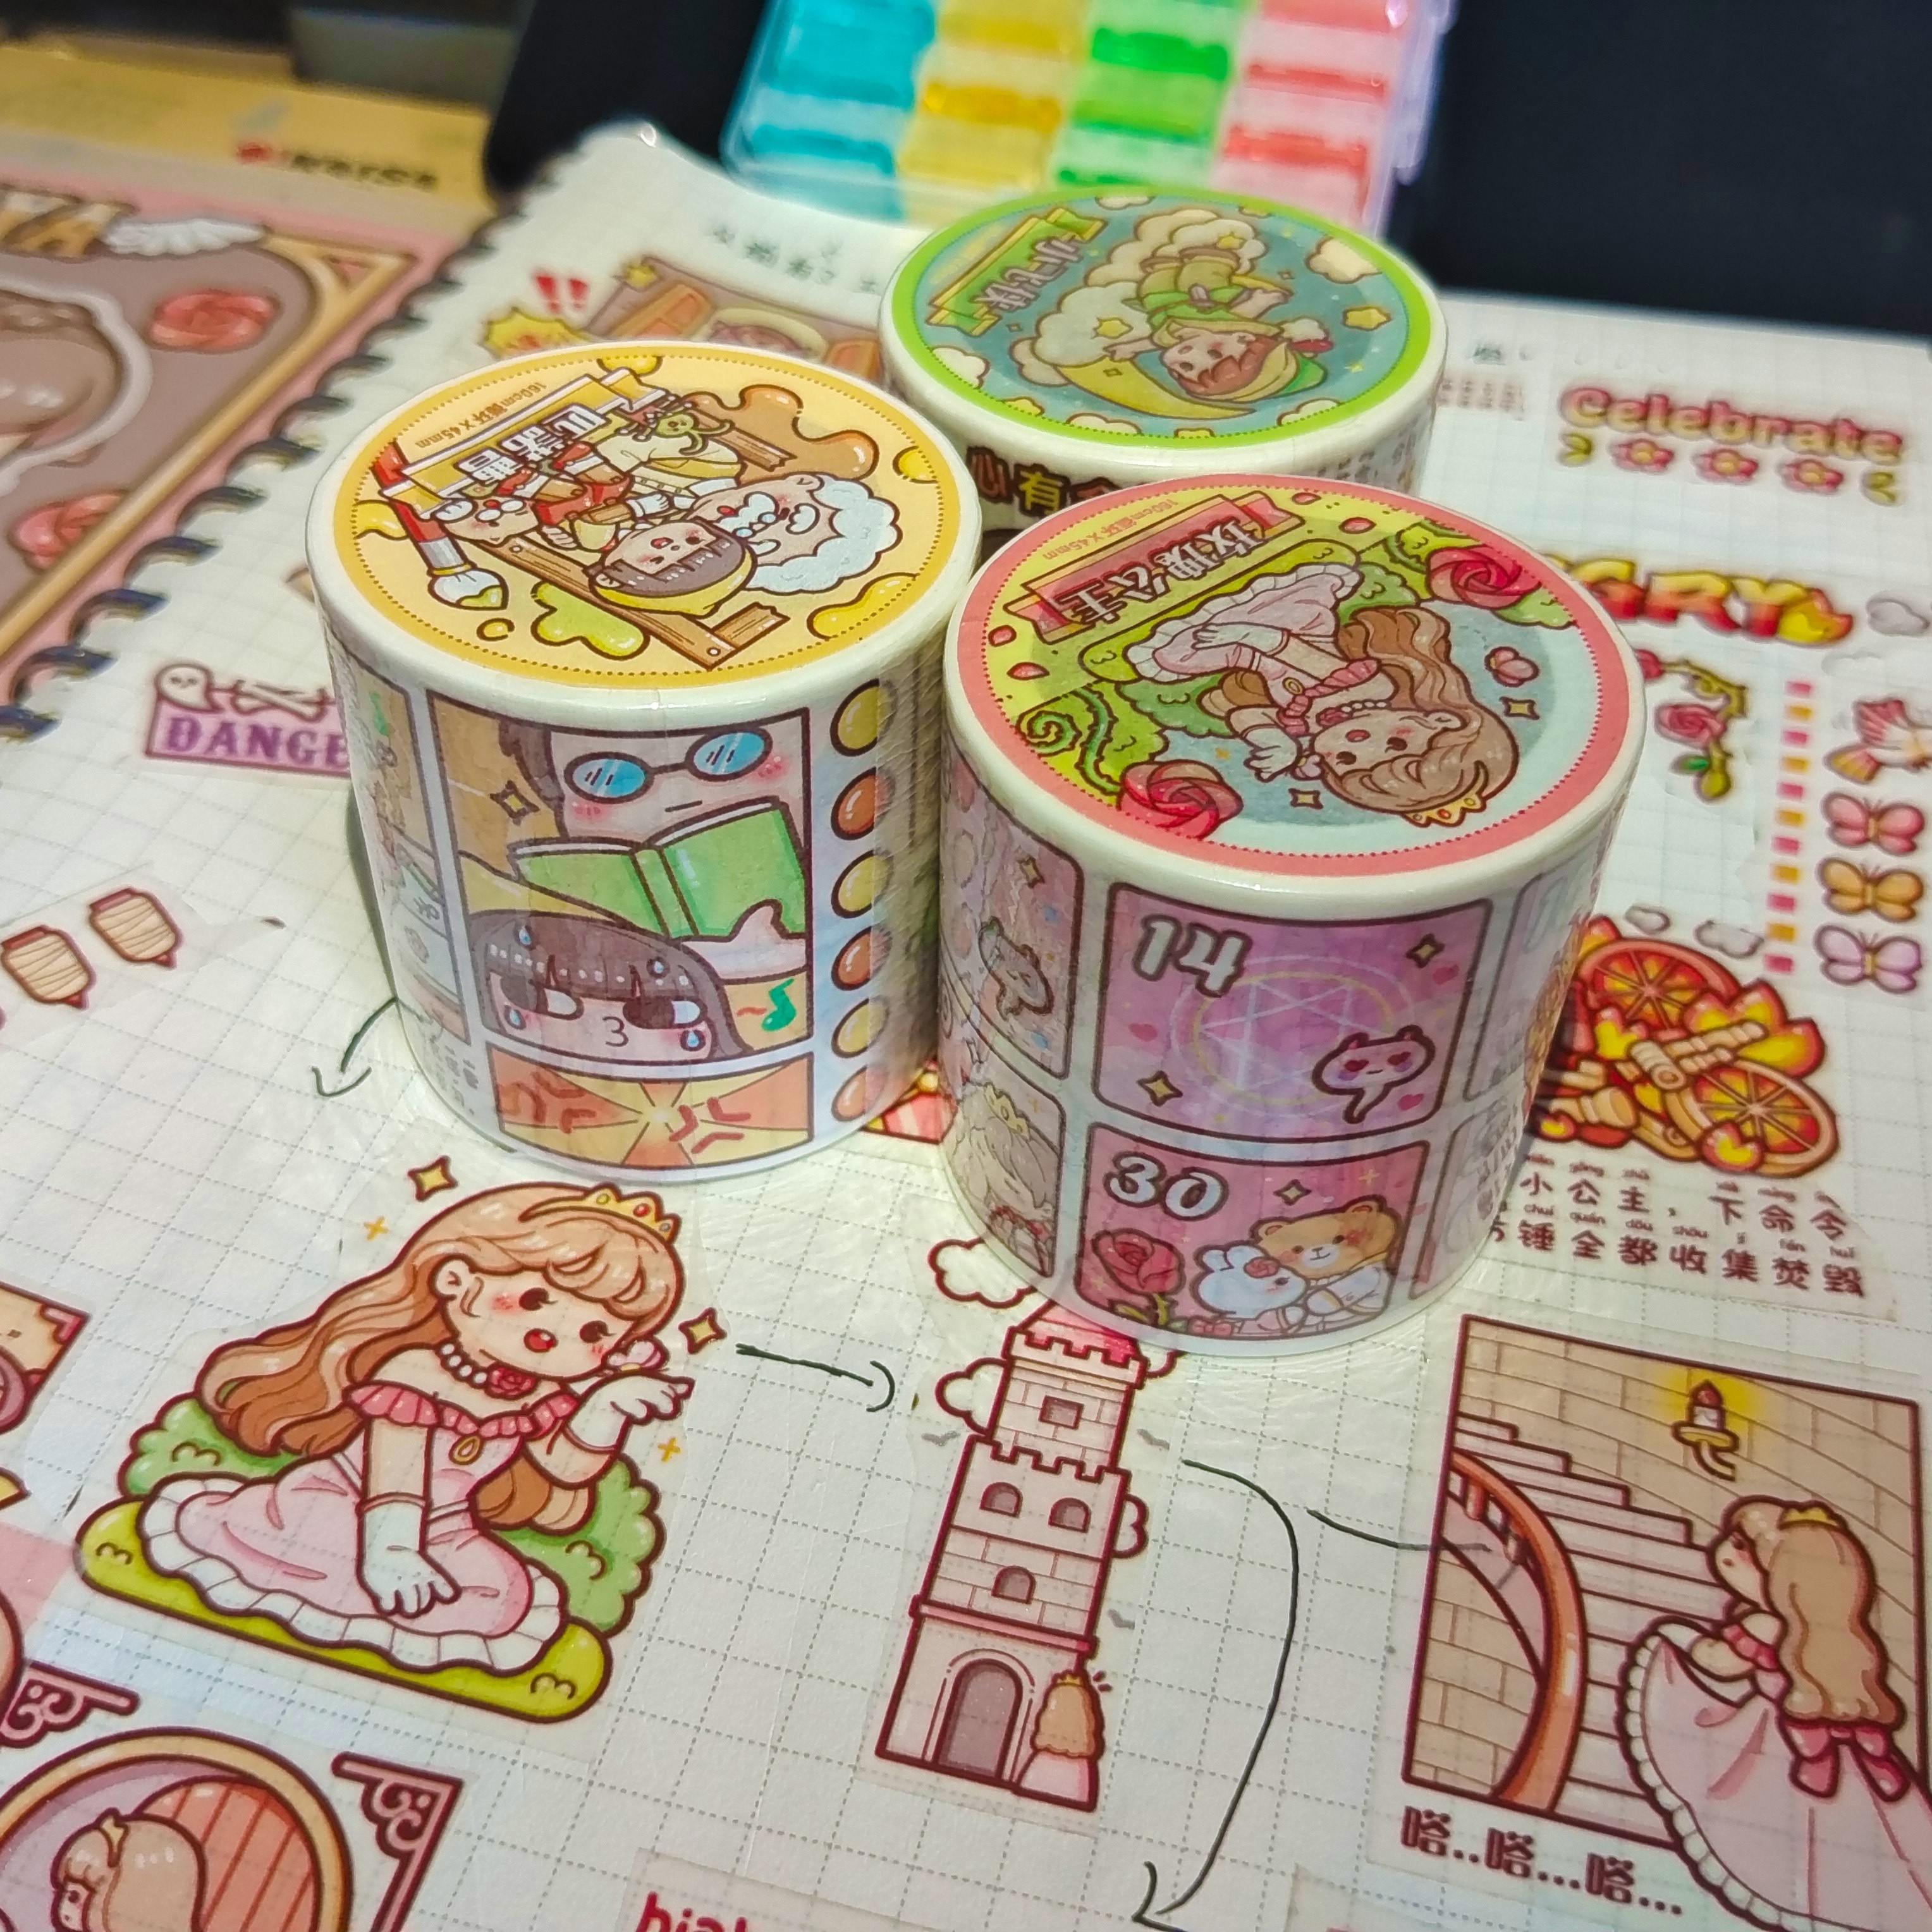 Adorable Cartoon Washi Tape - Perfect For Kpop Crafts, Diy